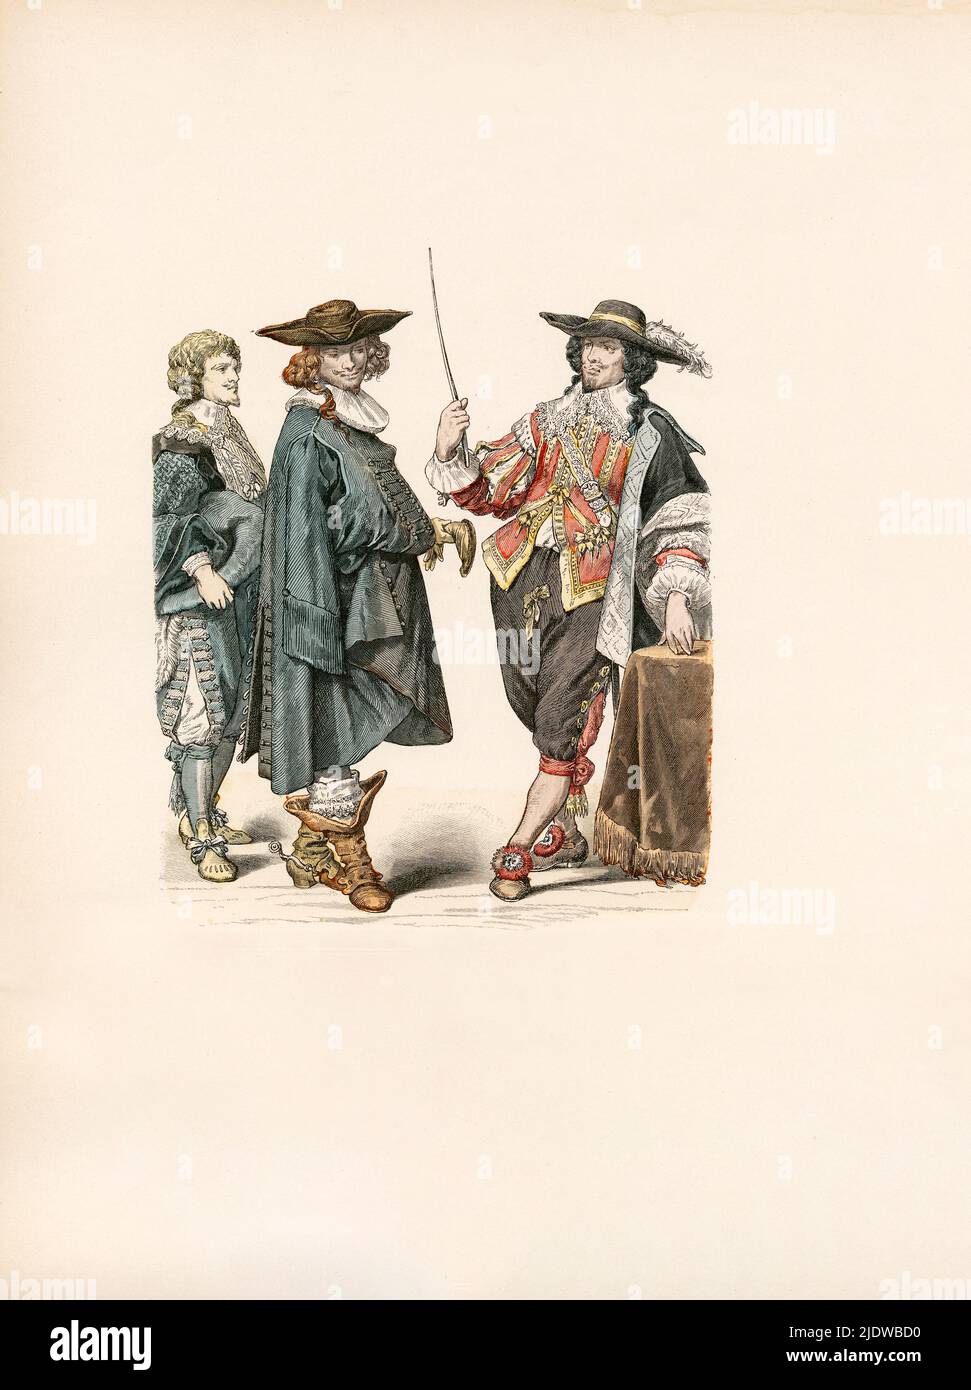 Nobleman, France, mid-17th Century, Illustration, The History of Costume, Braun & Schneider, Munich, Germany, 1861-1880 Stock Photo